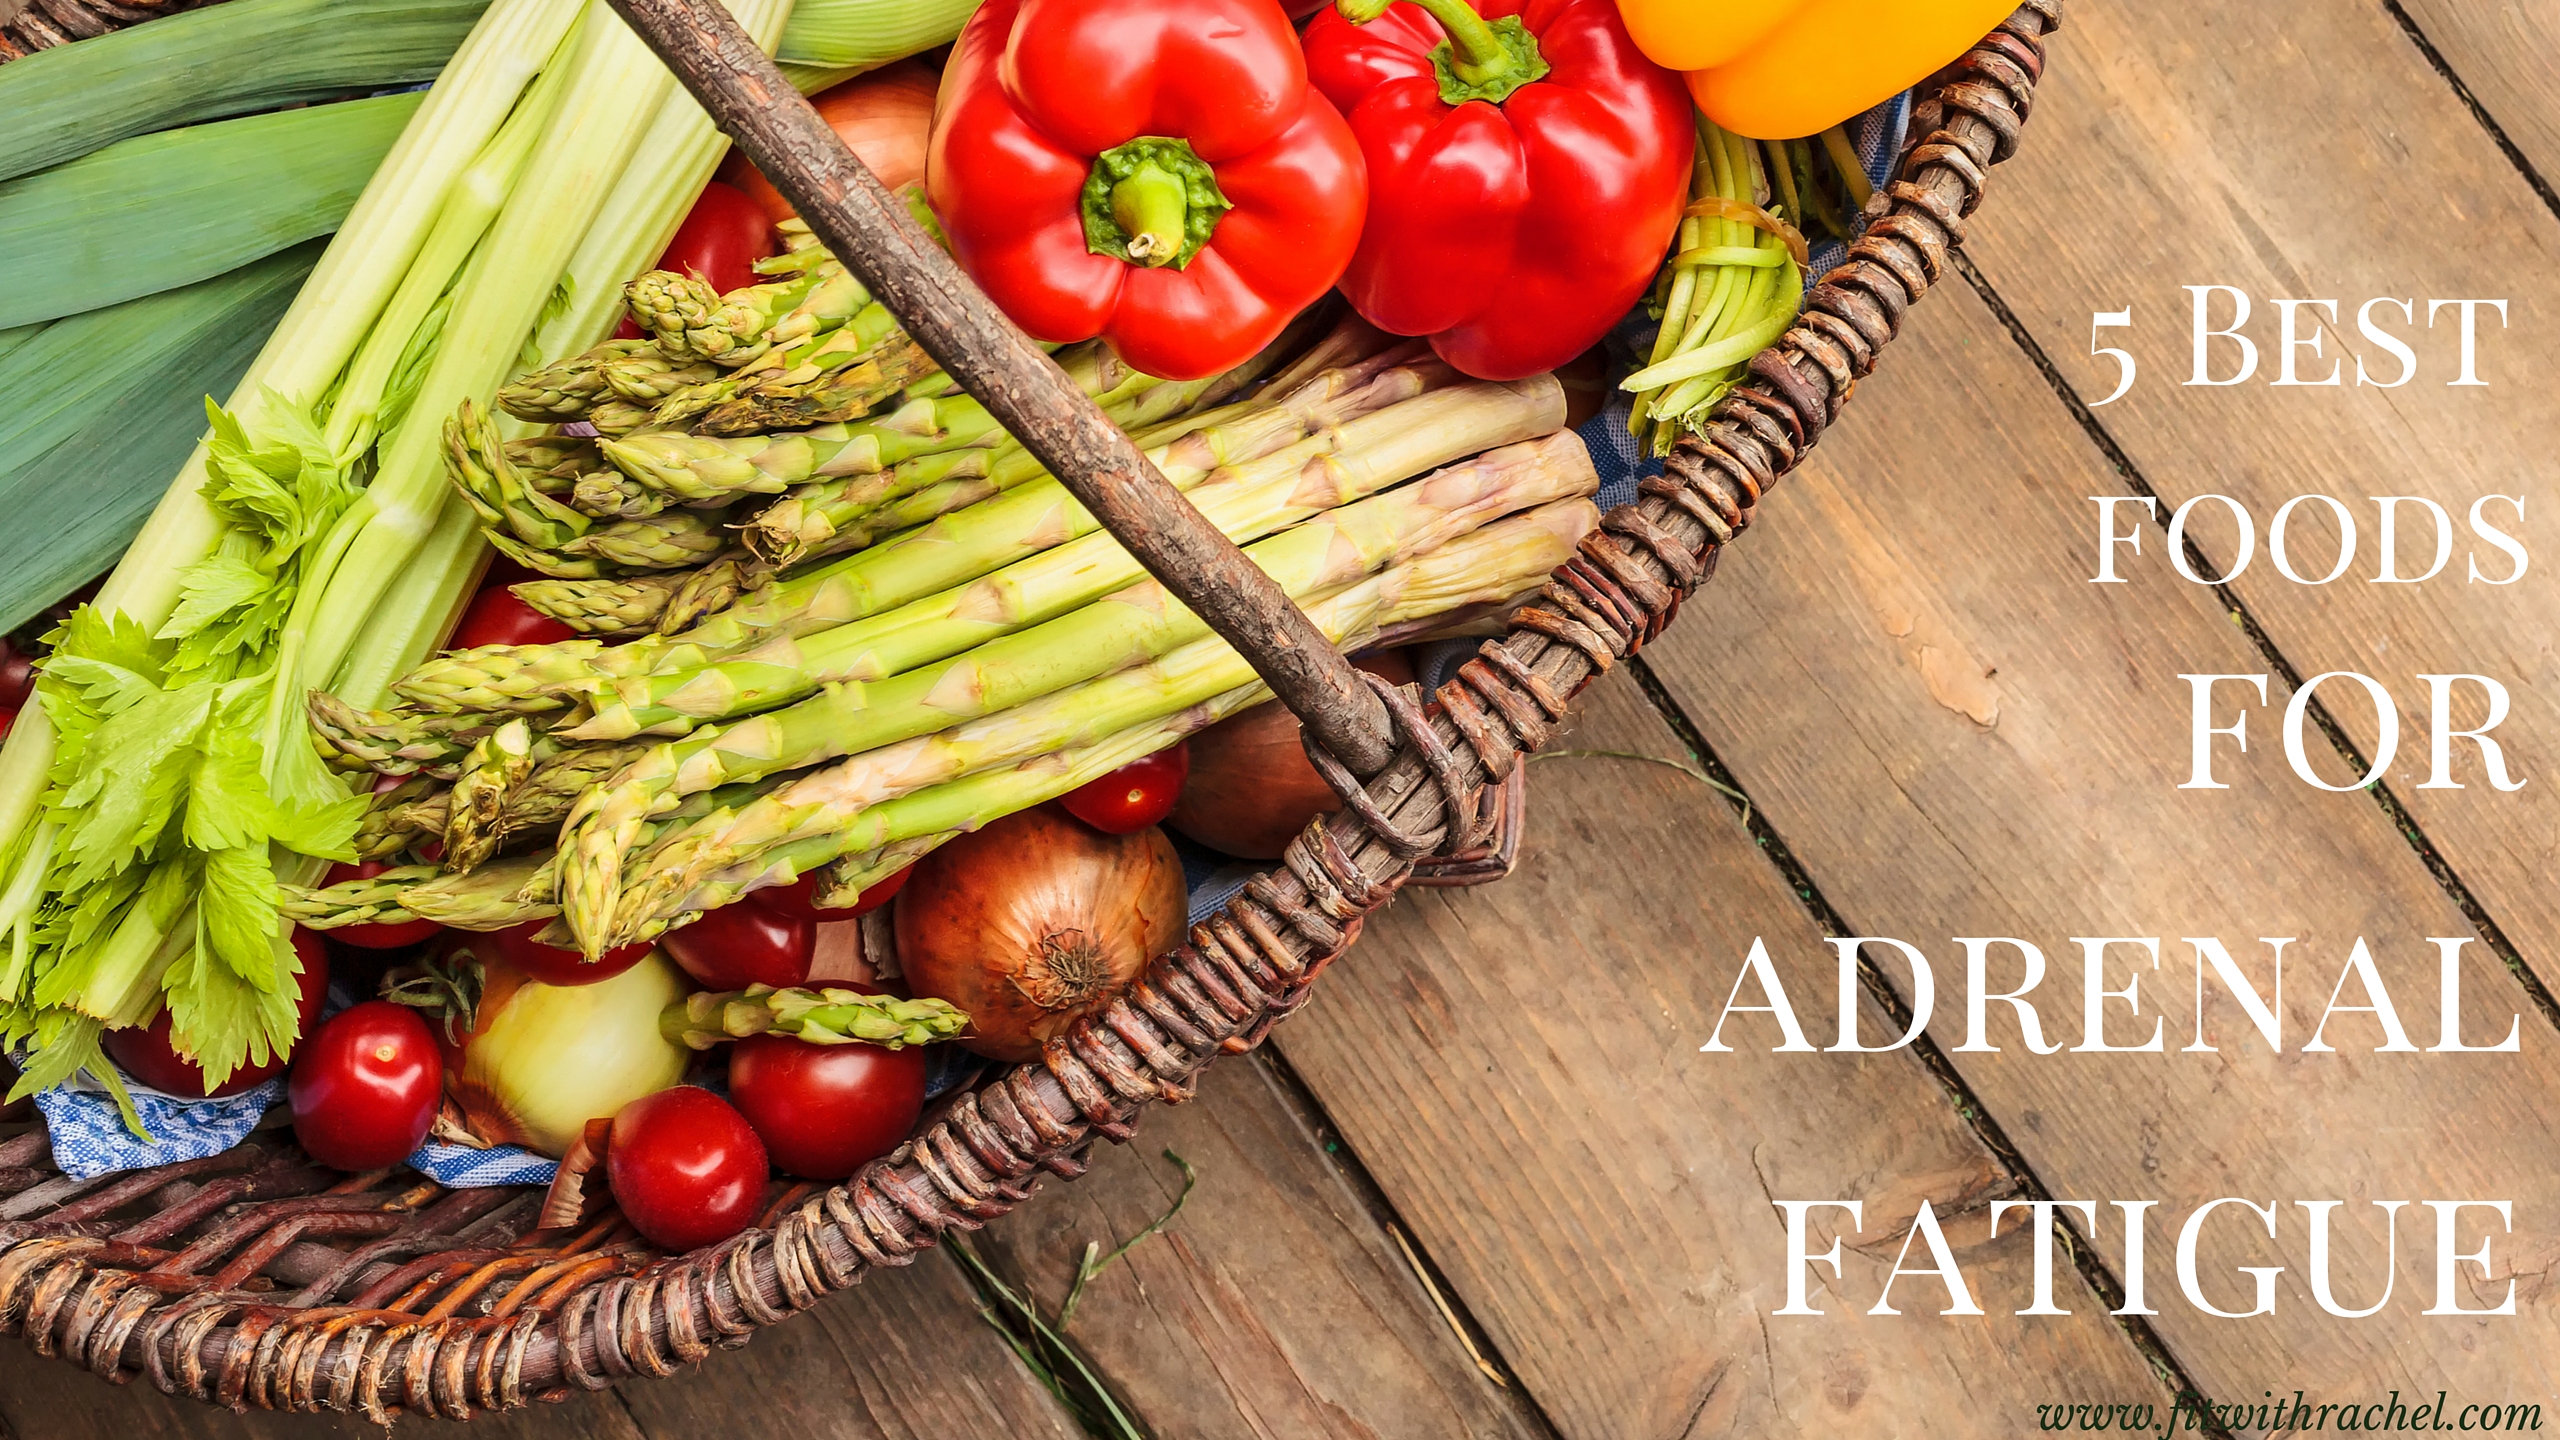 5 Best foods for adrenal fatigue